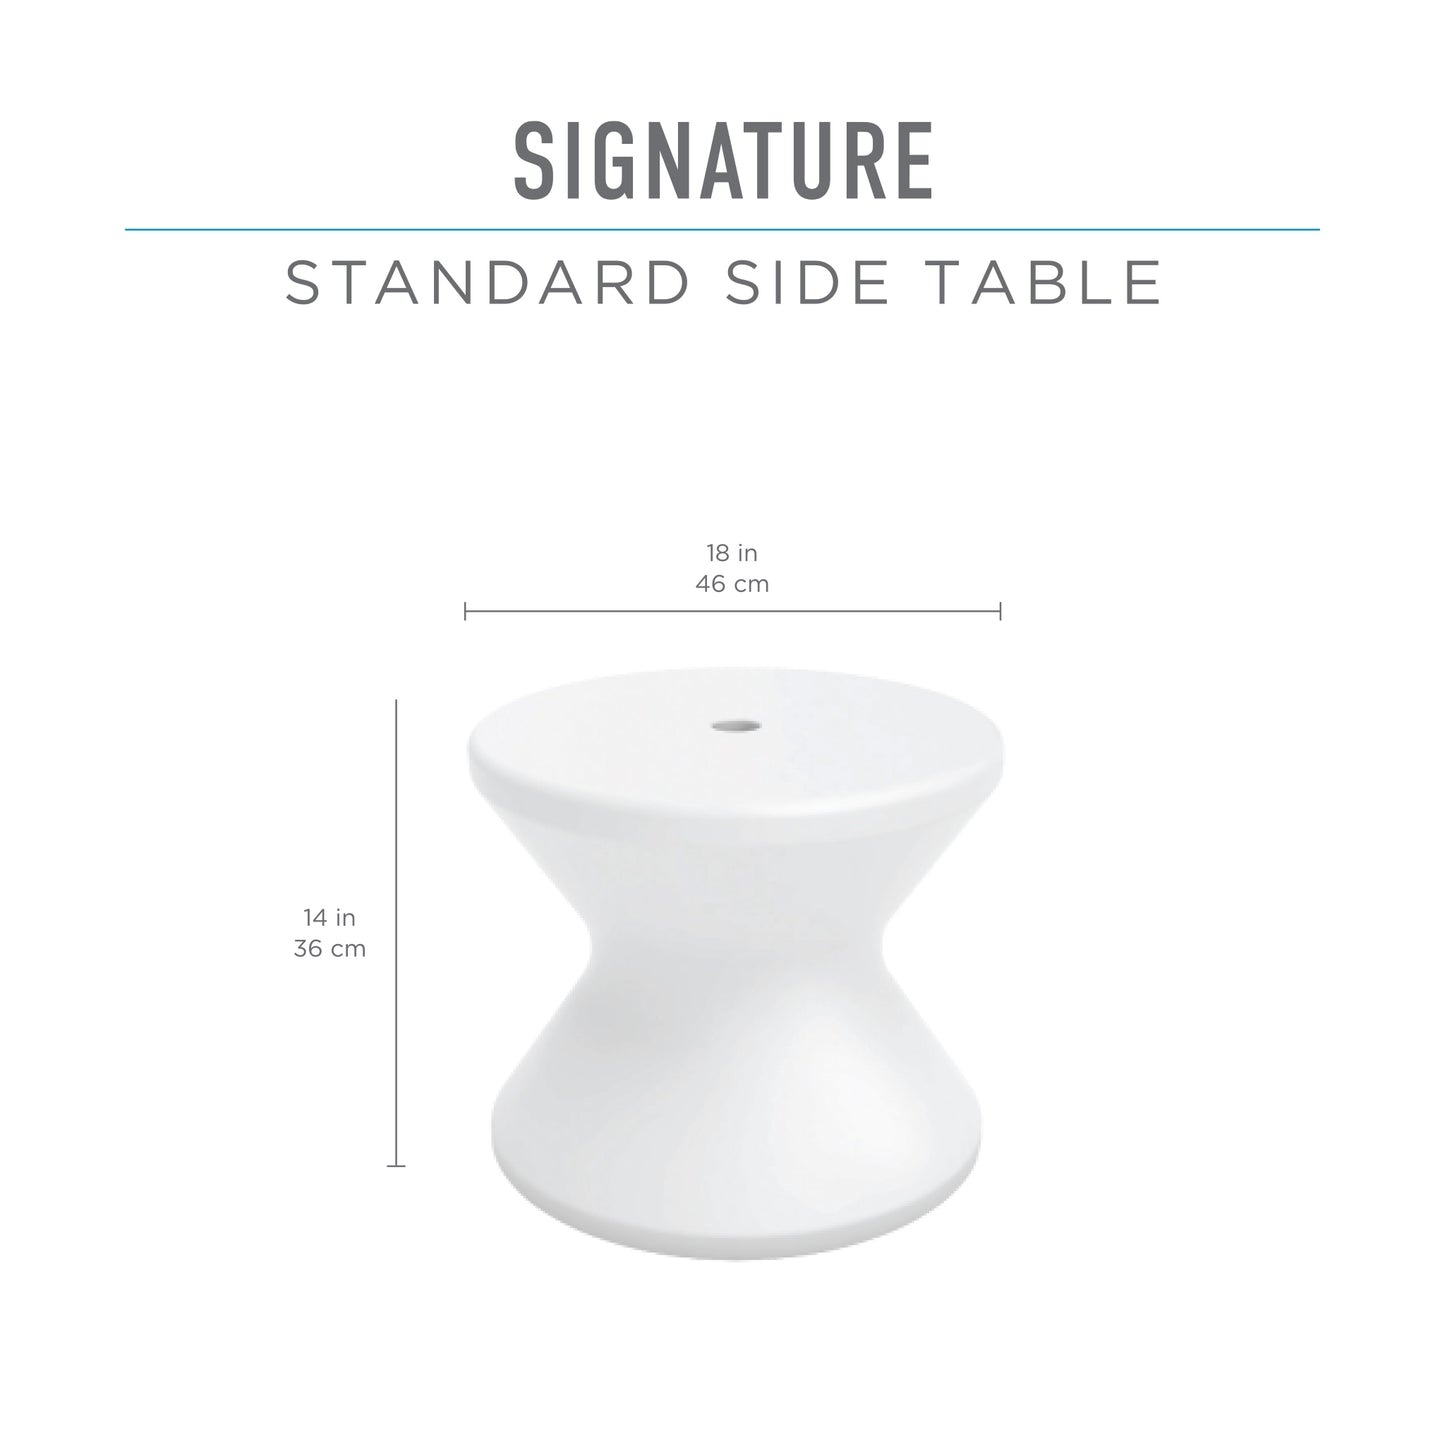 Ledge Lounger Signature Standard Side Table